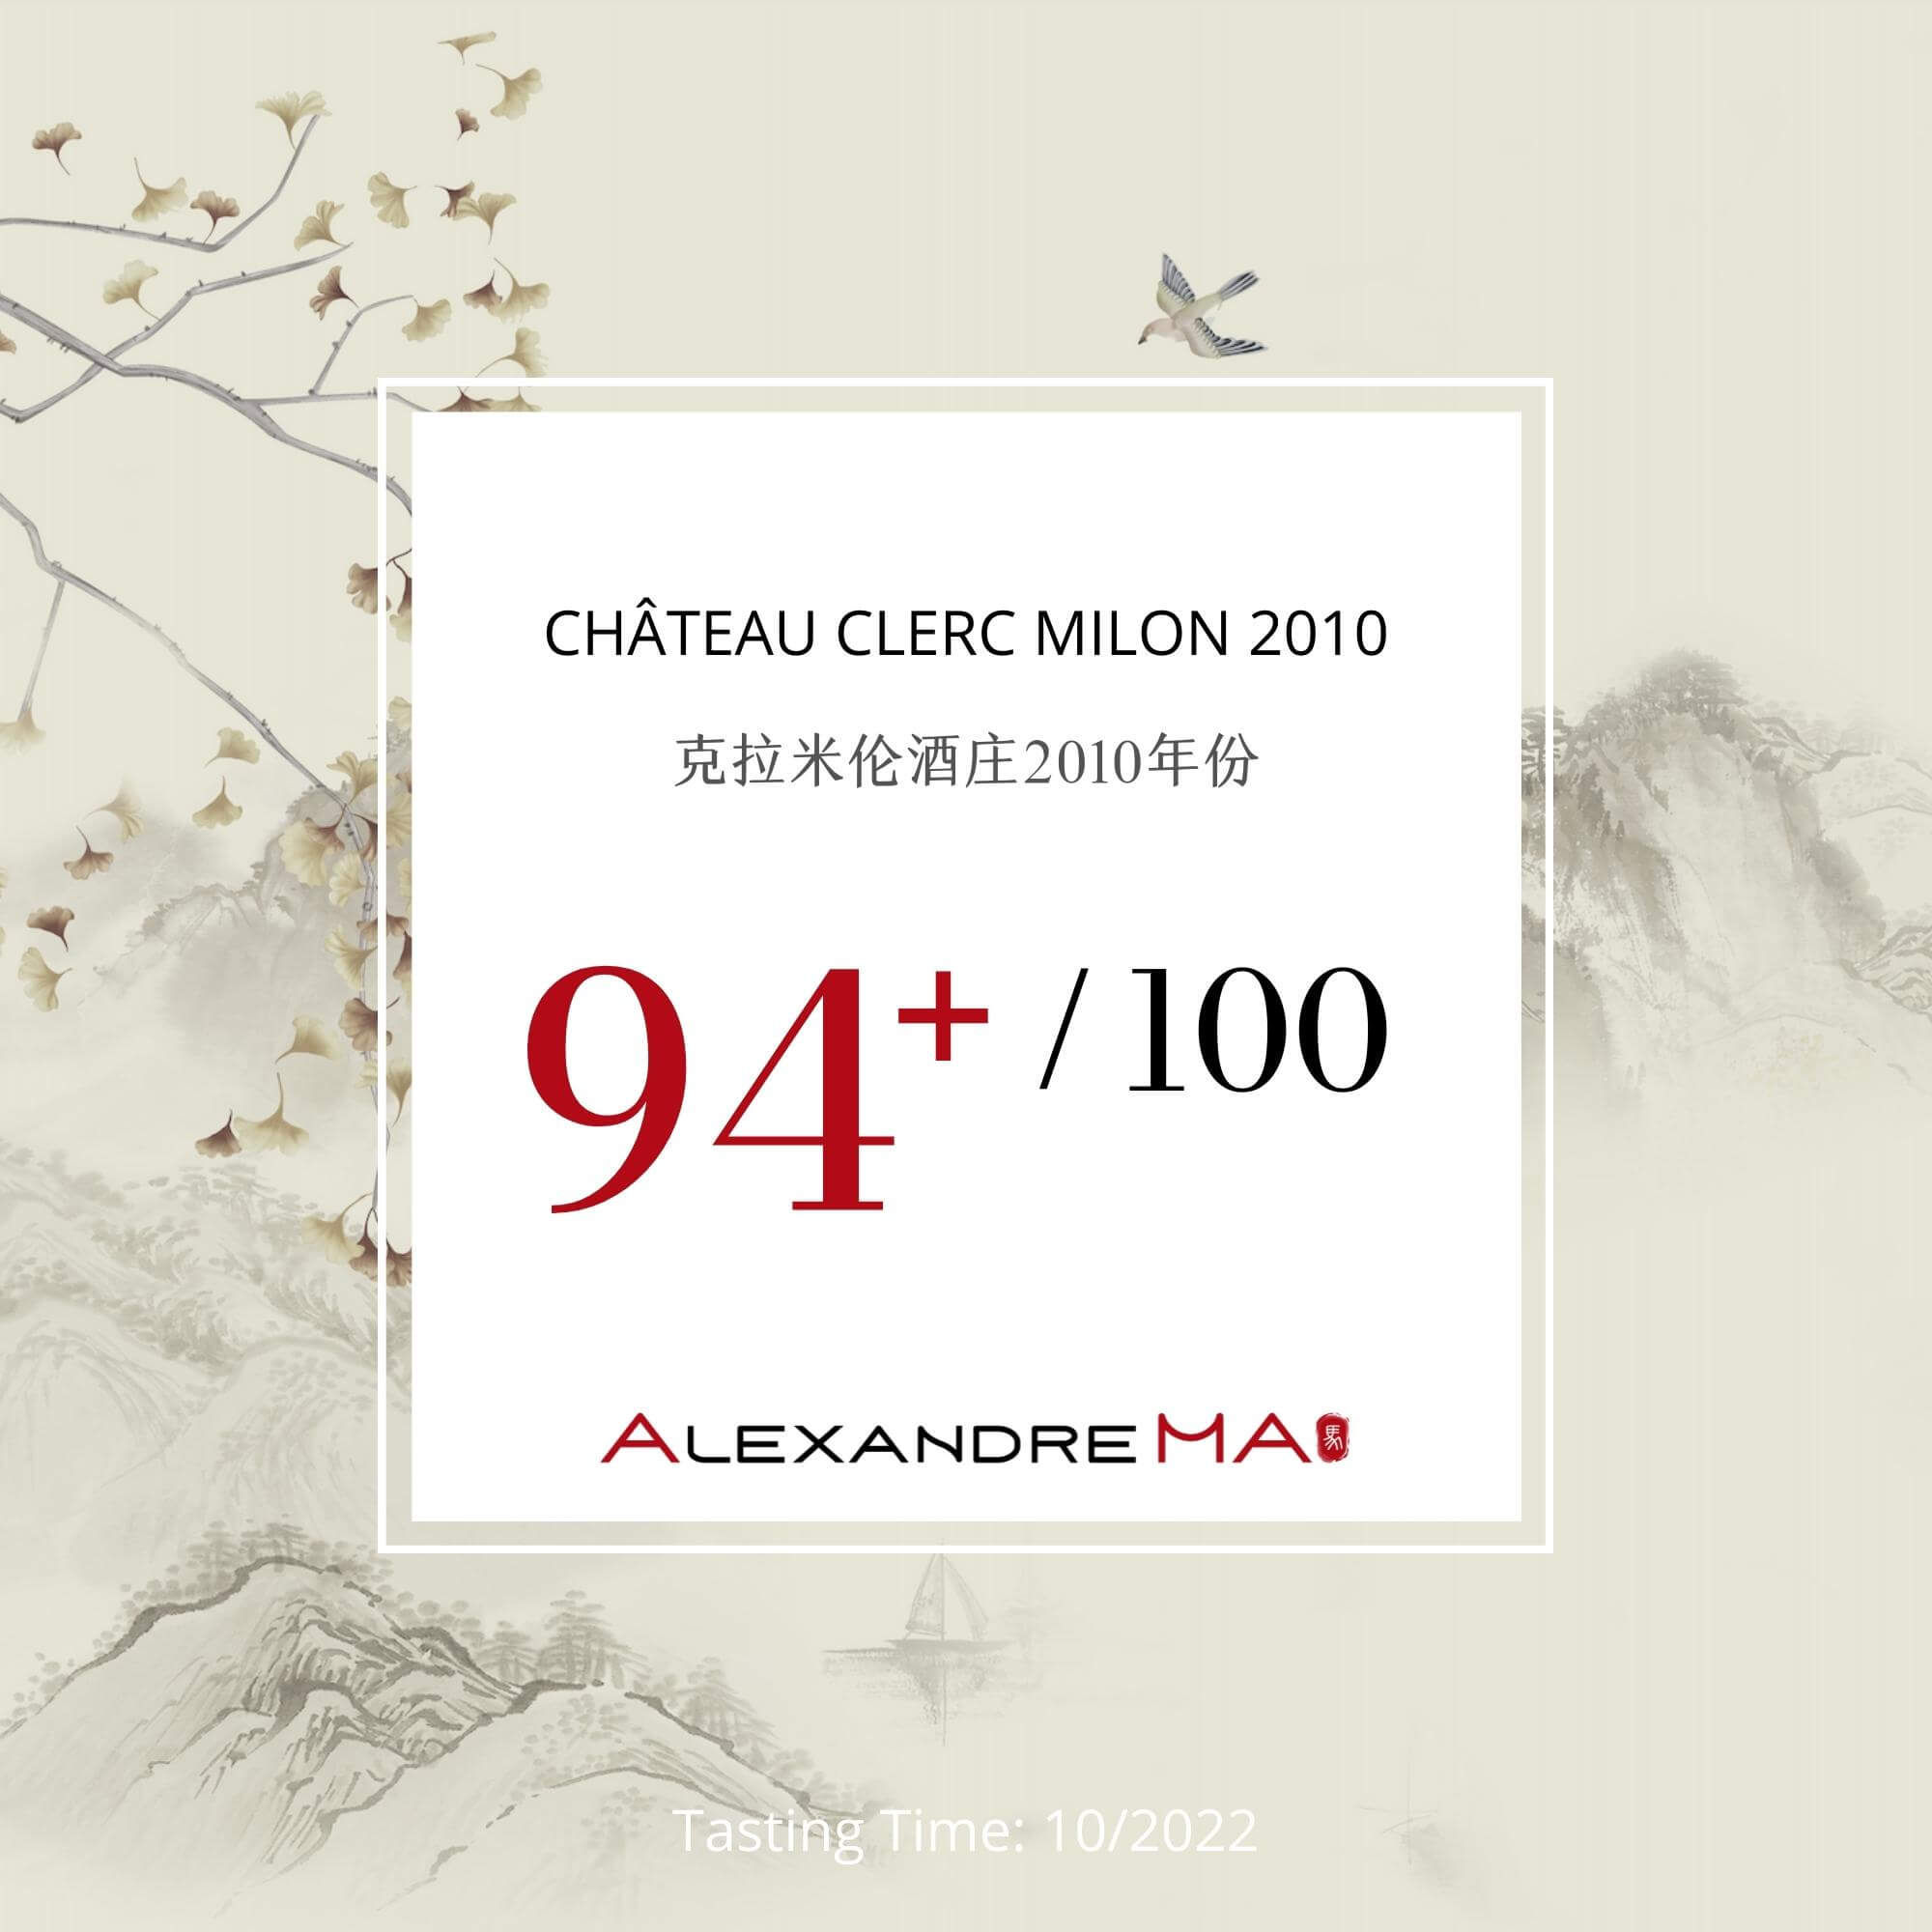 Château Clerc Milon 2010 - Alexandre MA